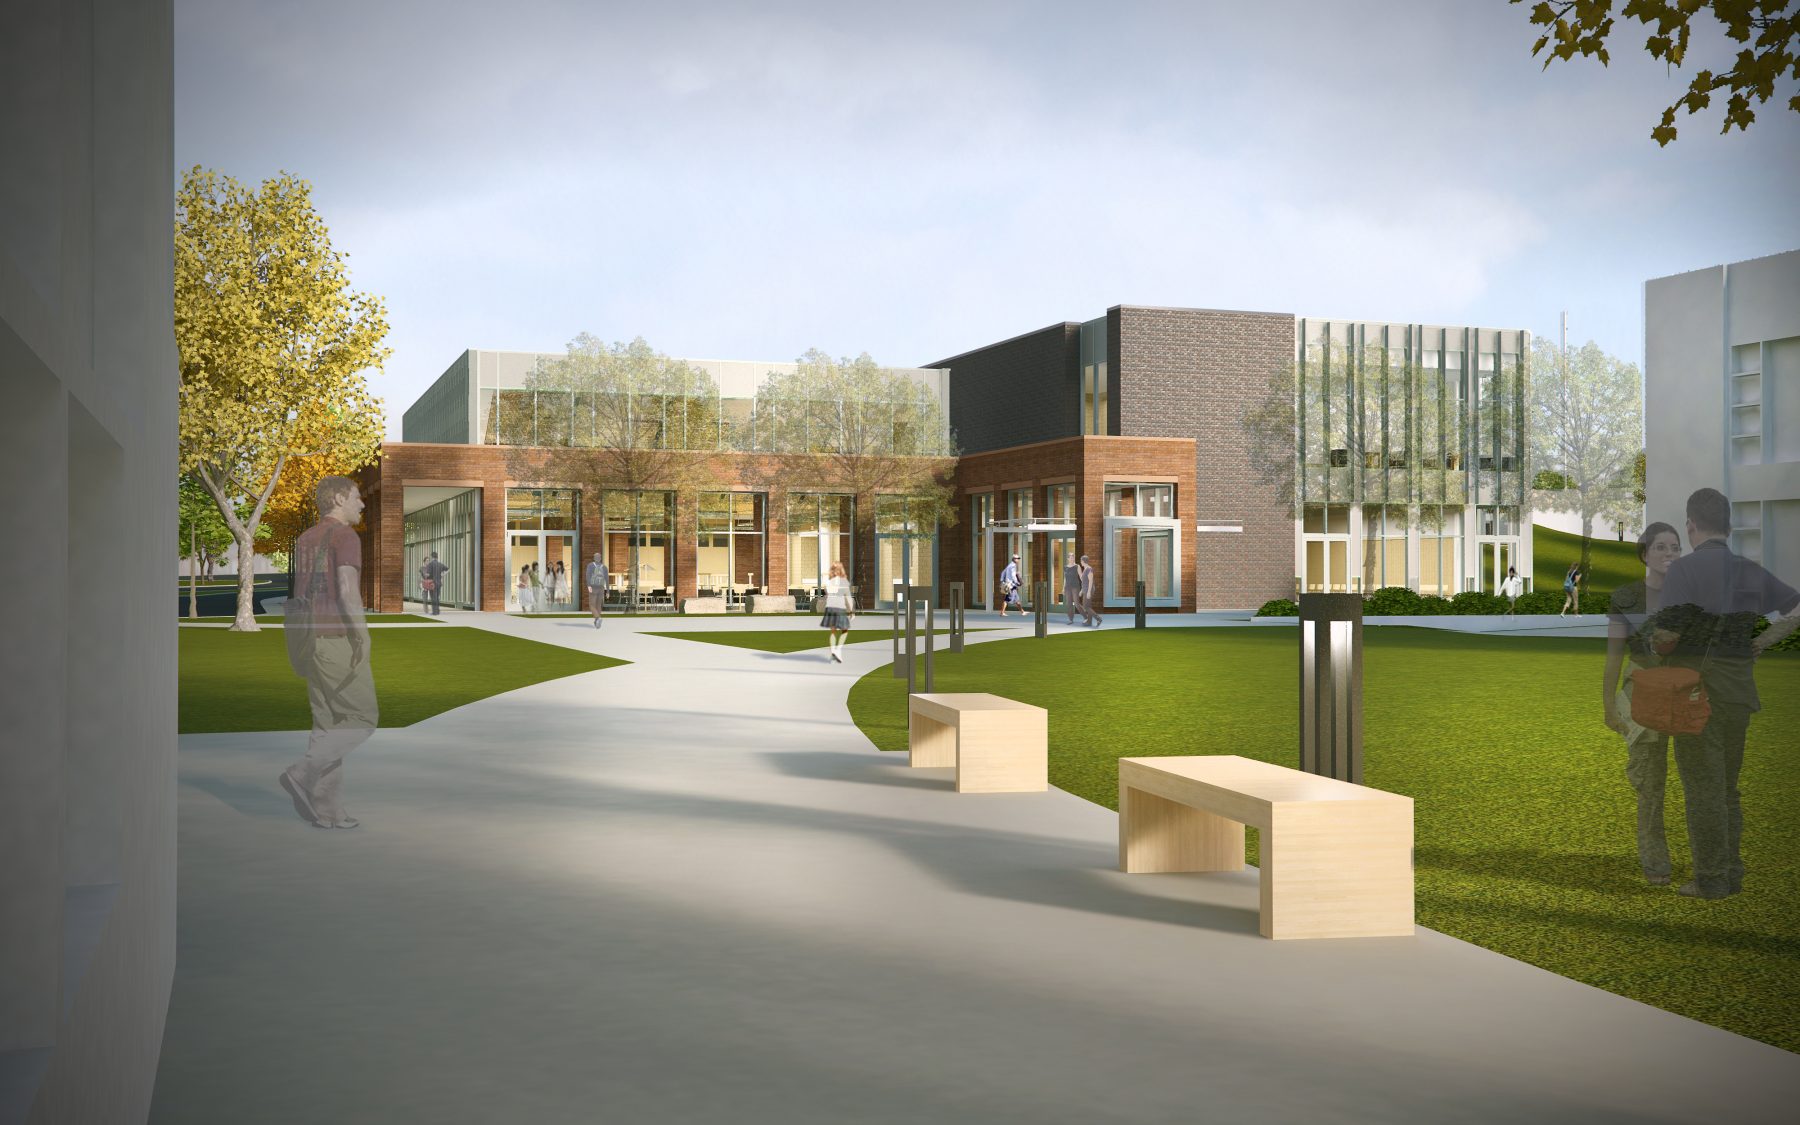 Shipley School Commons Exterior rendering with pedestrians